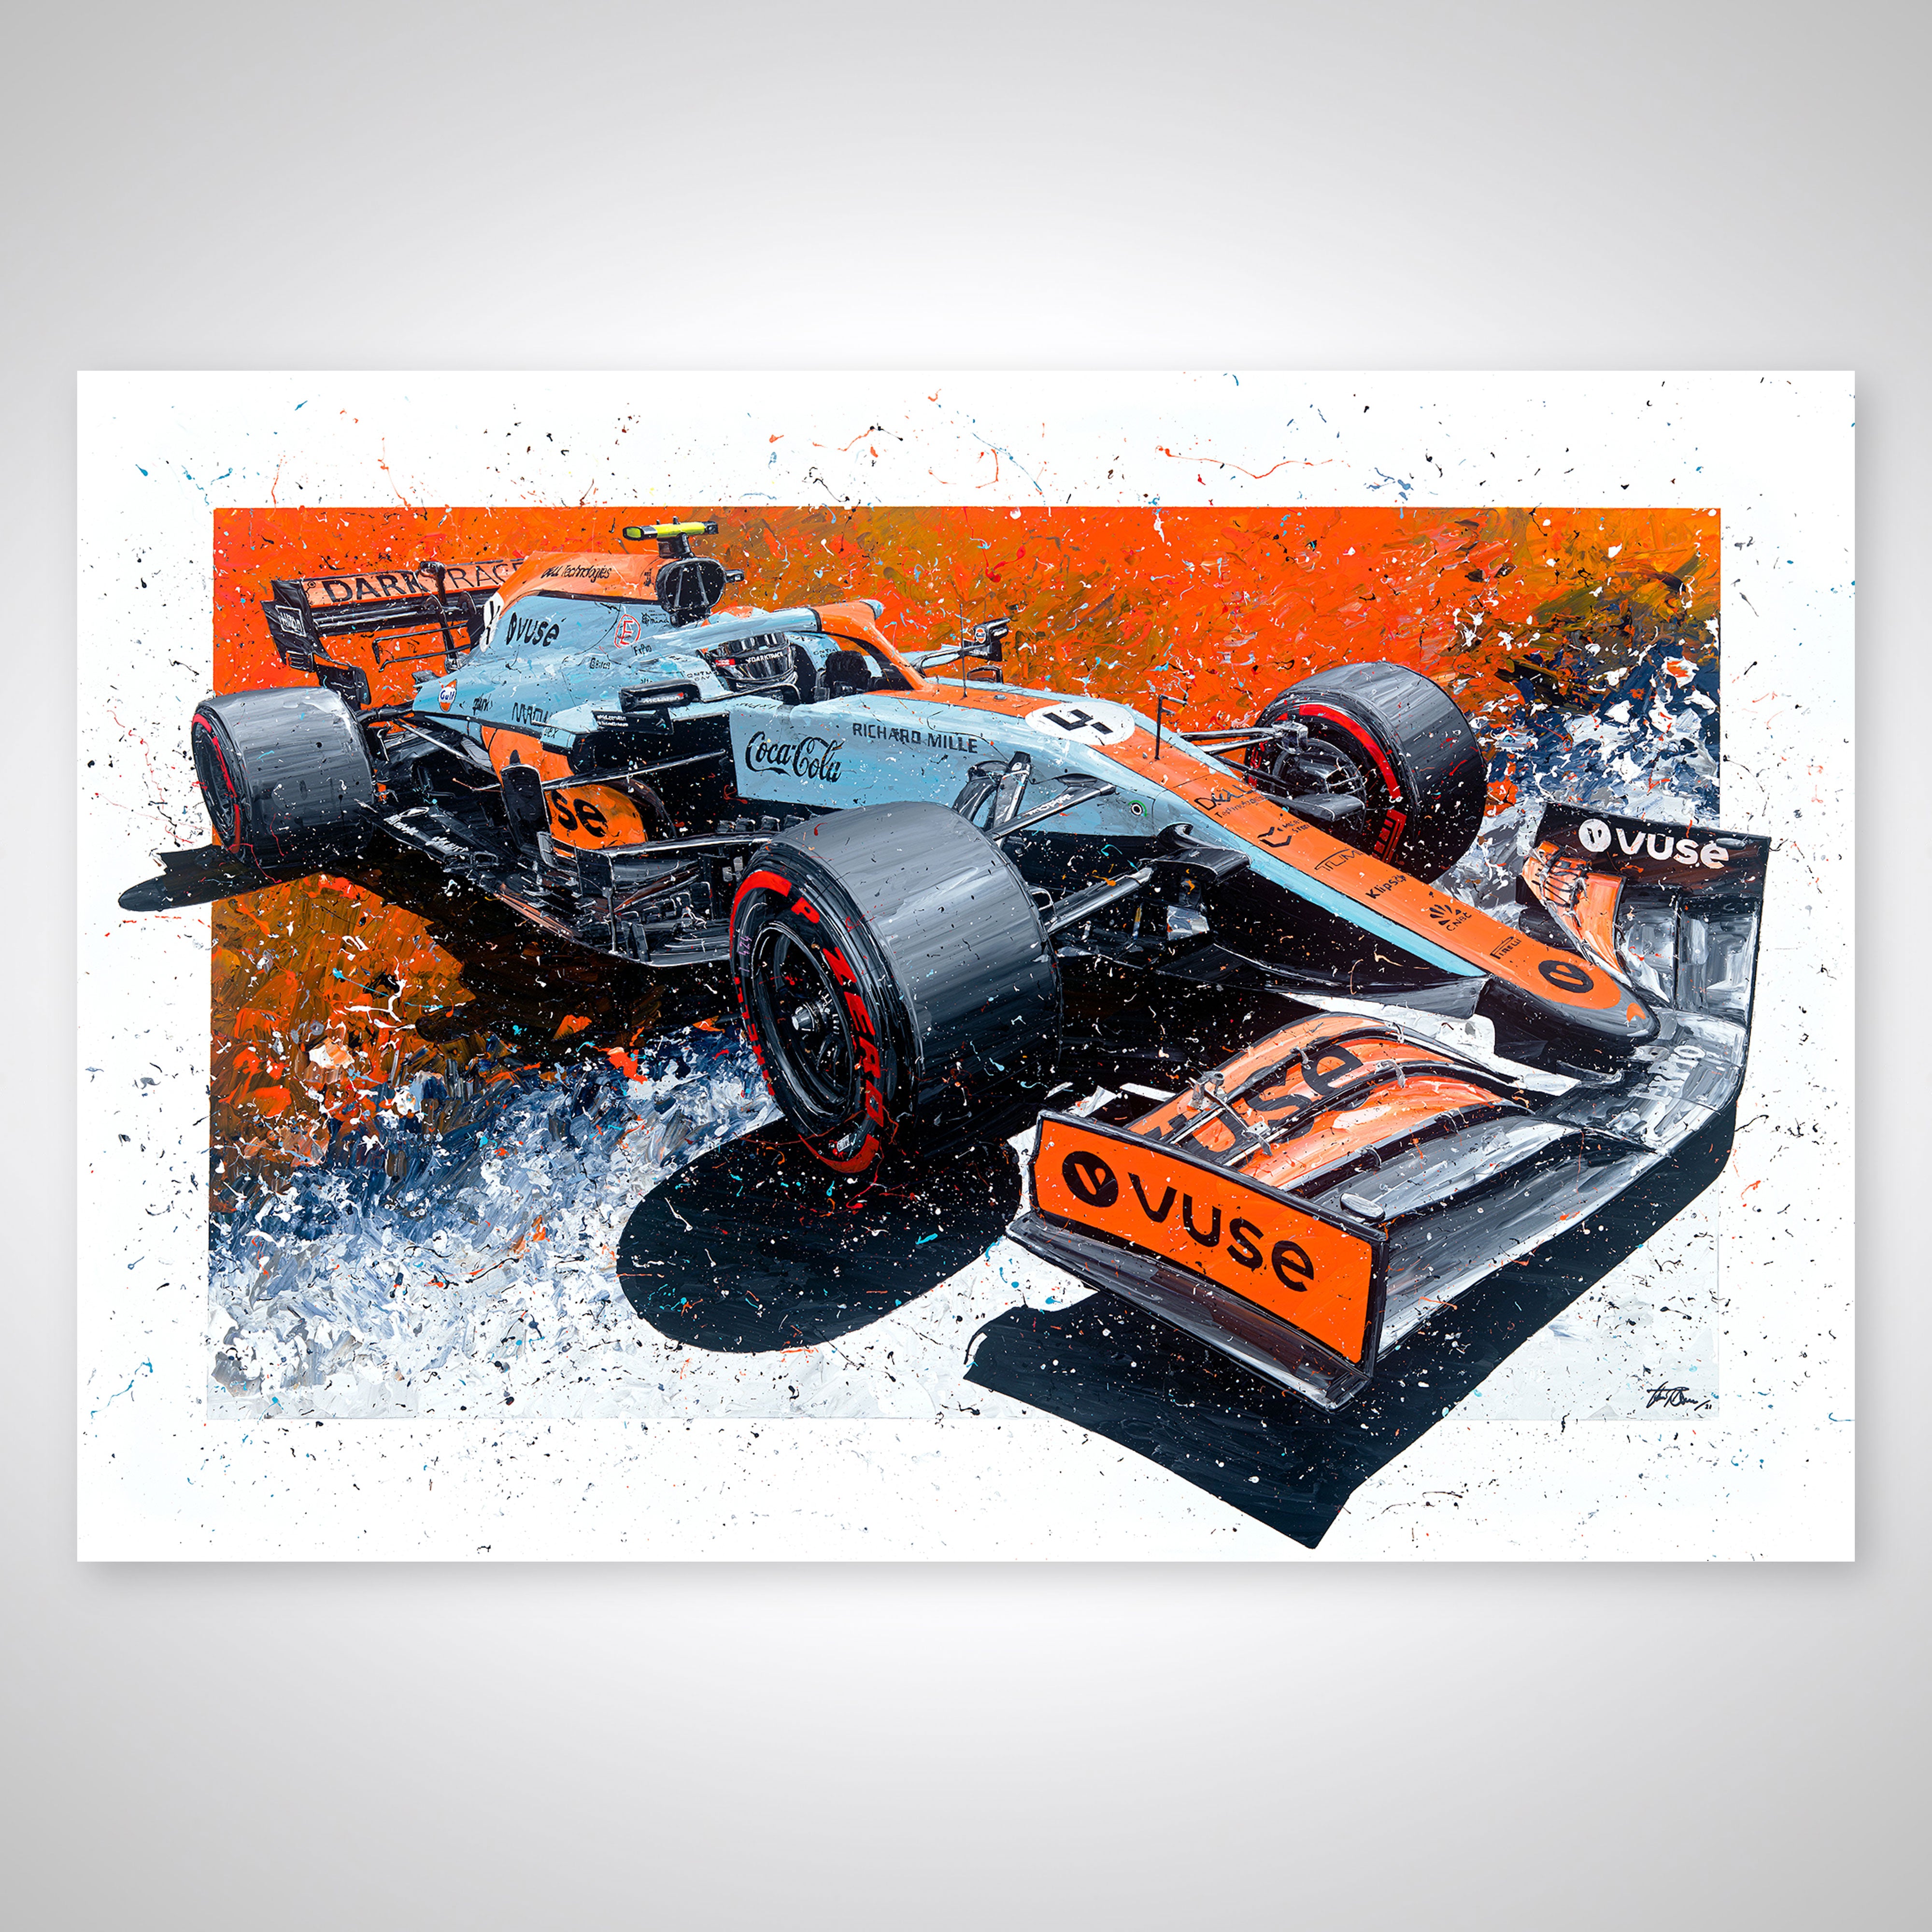 Lando Norris 2022 Limited Edition Poster - McLaren F1